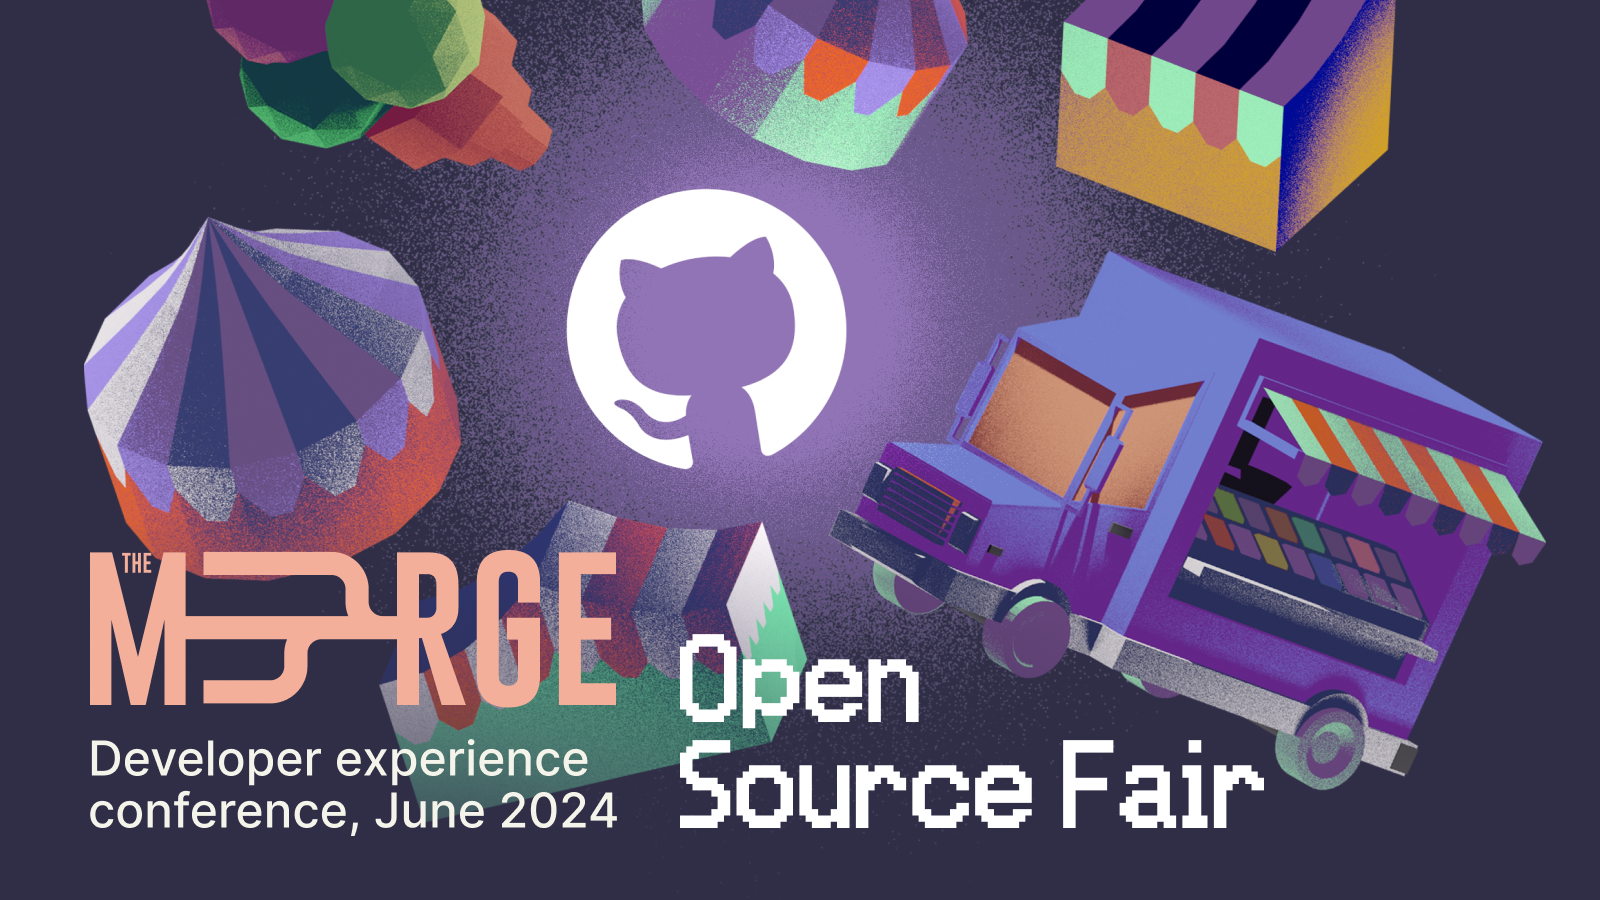 Open Source Fair @ The Merge